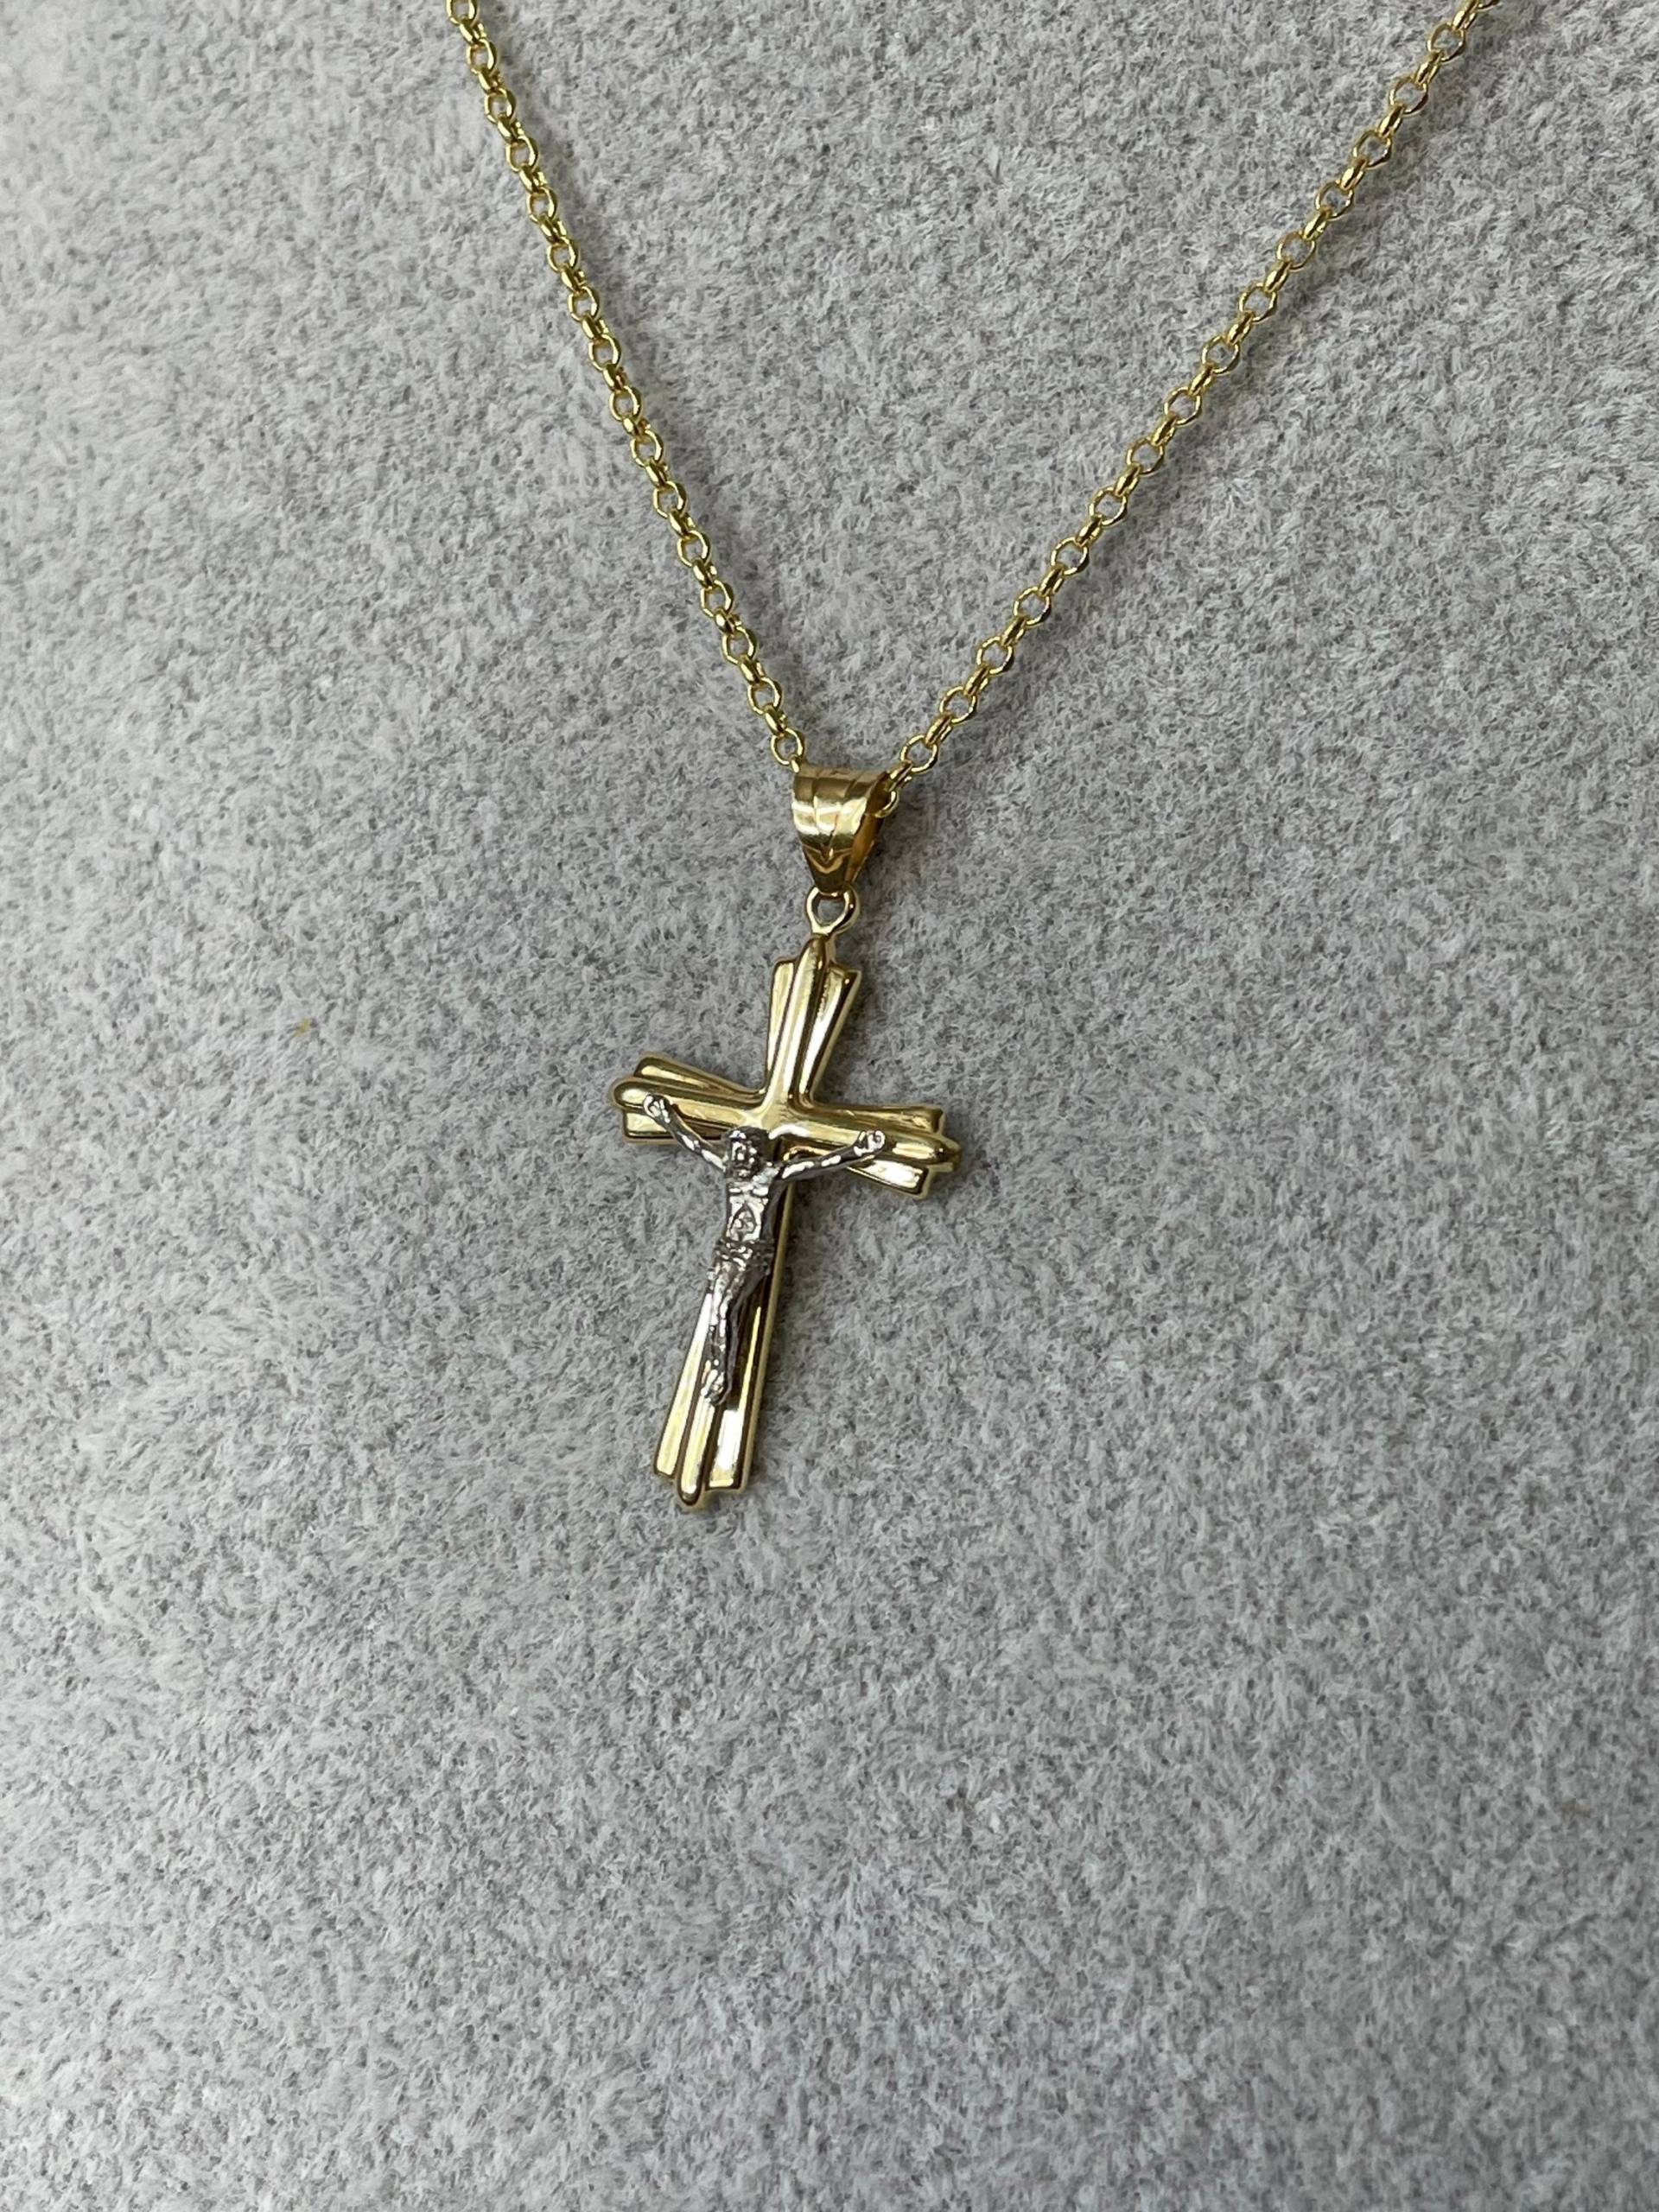 18K Massivgold Kreuz Halskette Rolo Kette 1, 5mm von GoldenCanadaClub